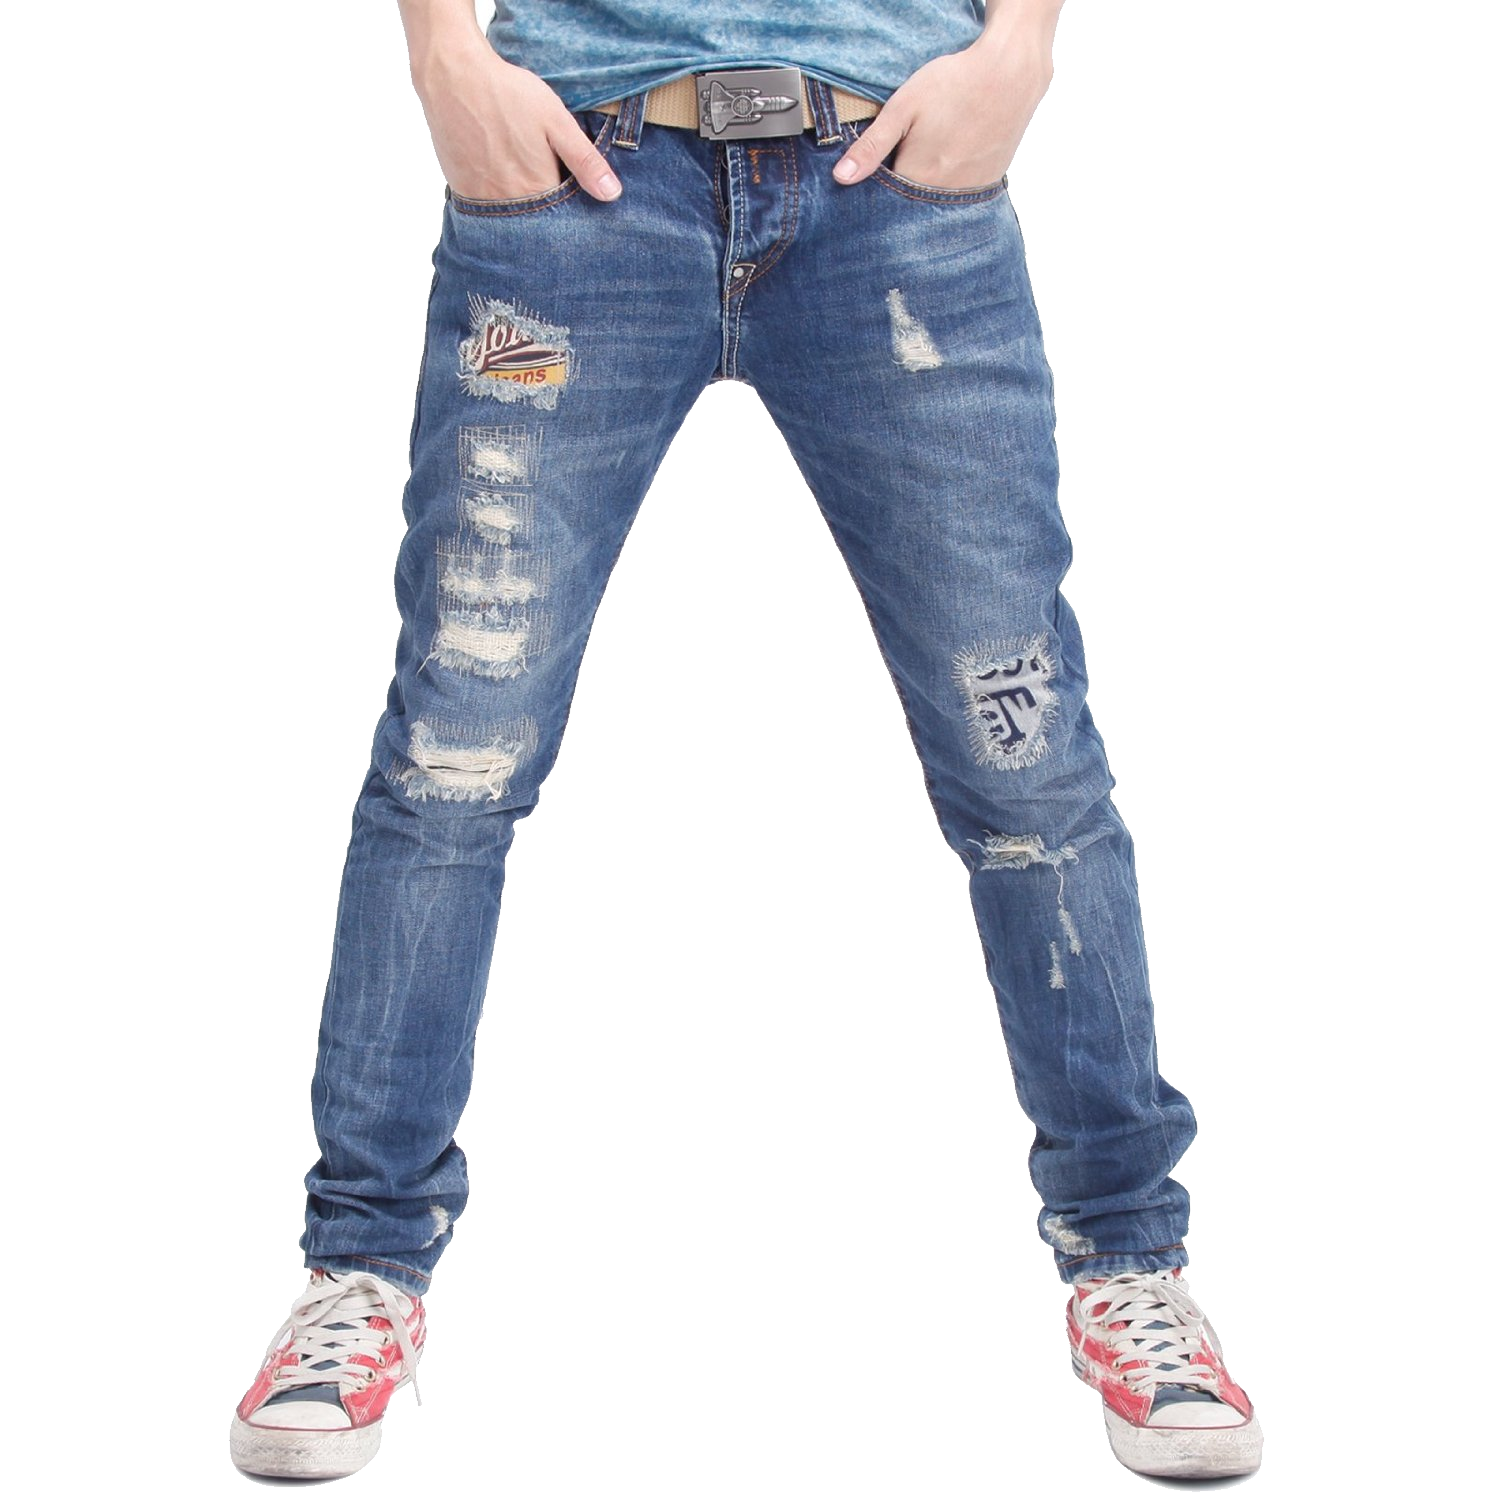 Men Jeans PNG Free File Download